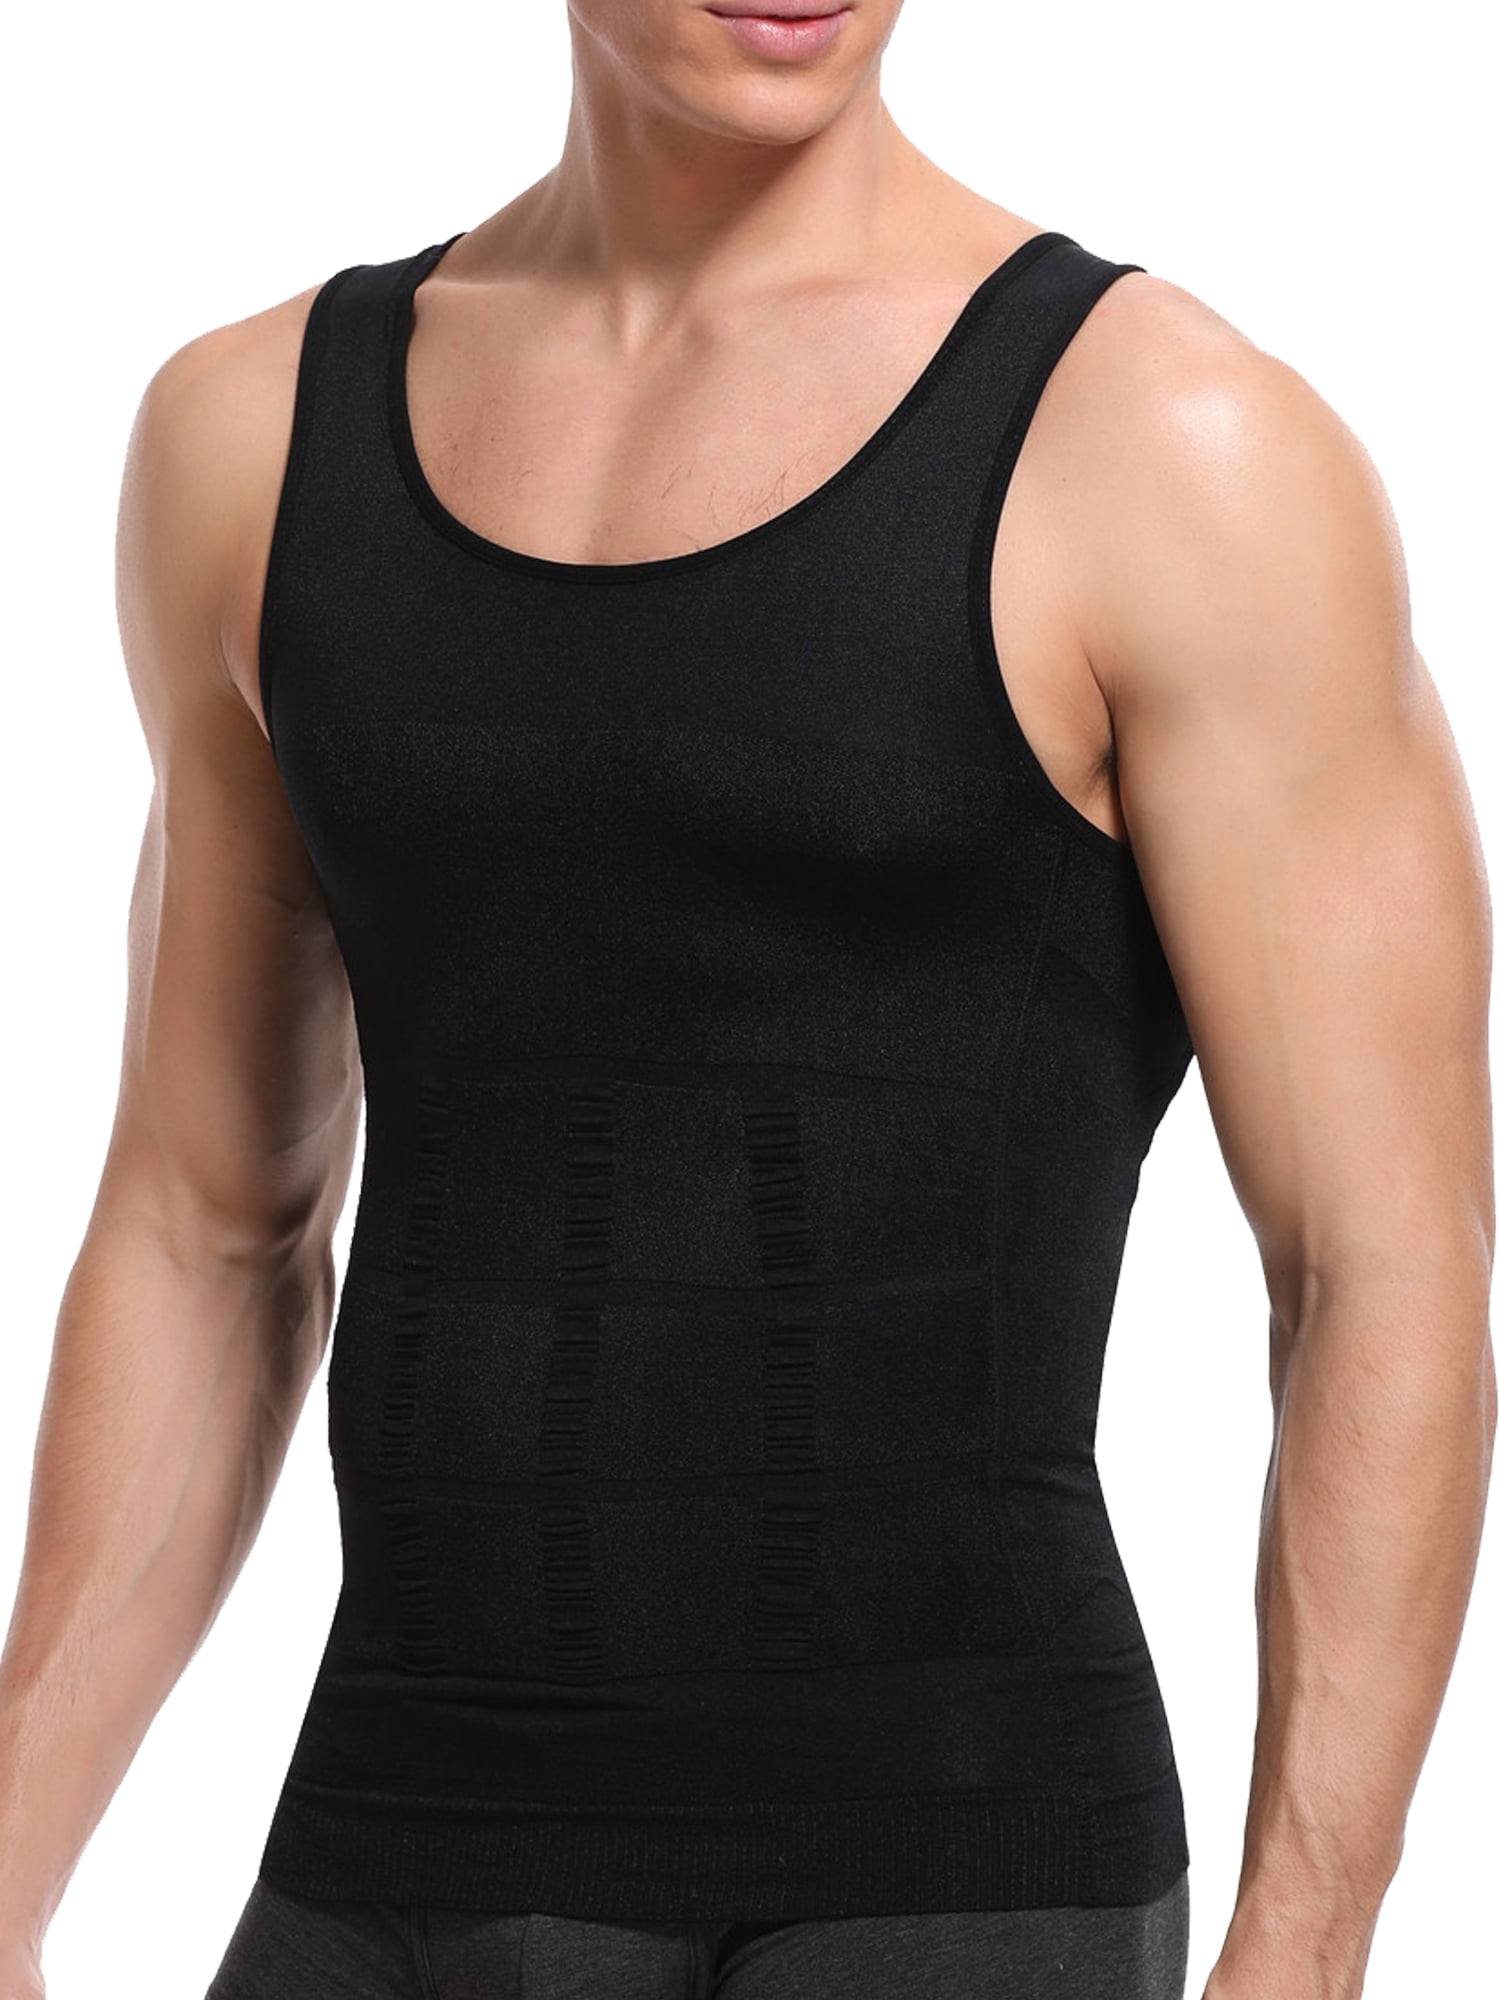 mens compression shirt chest